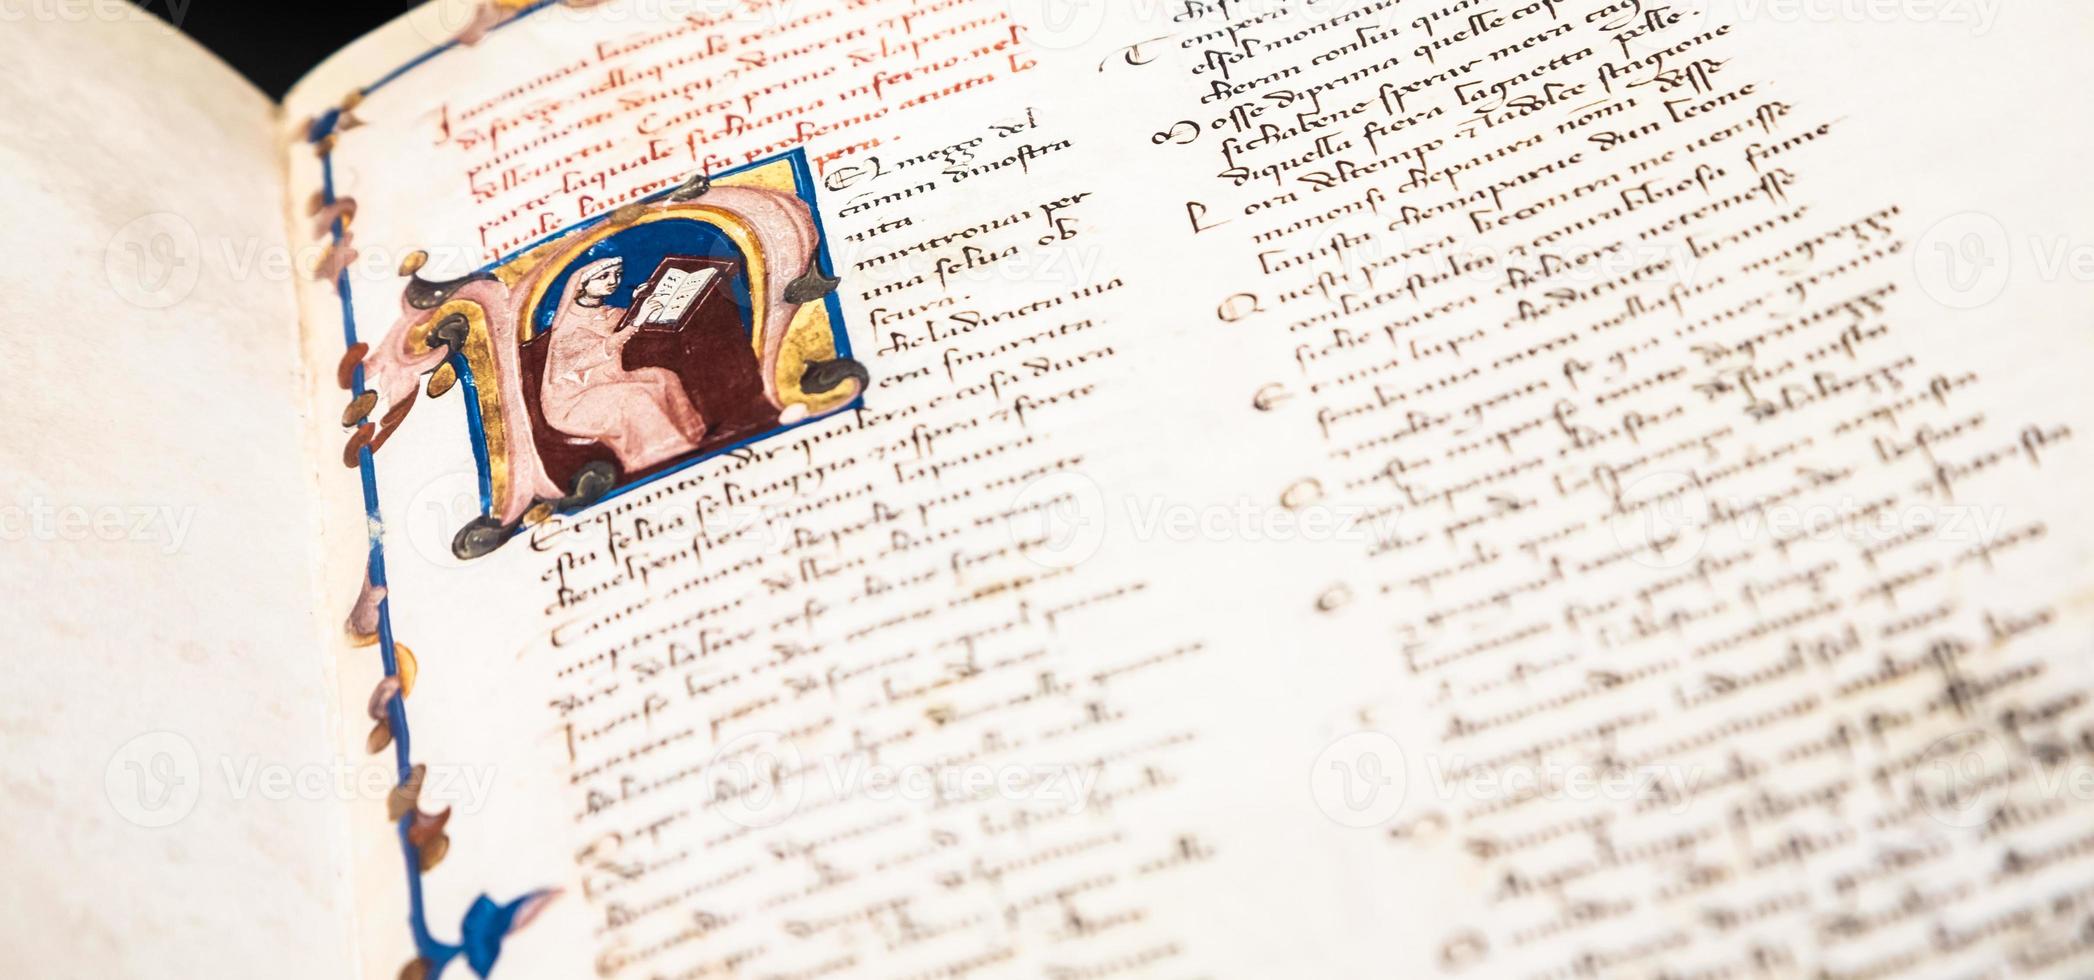 Antique manuscript sheet from Dante Divine Comedy. photo